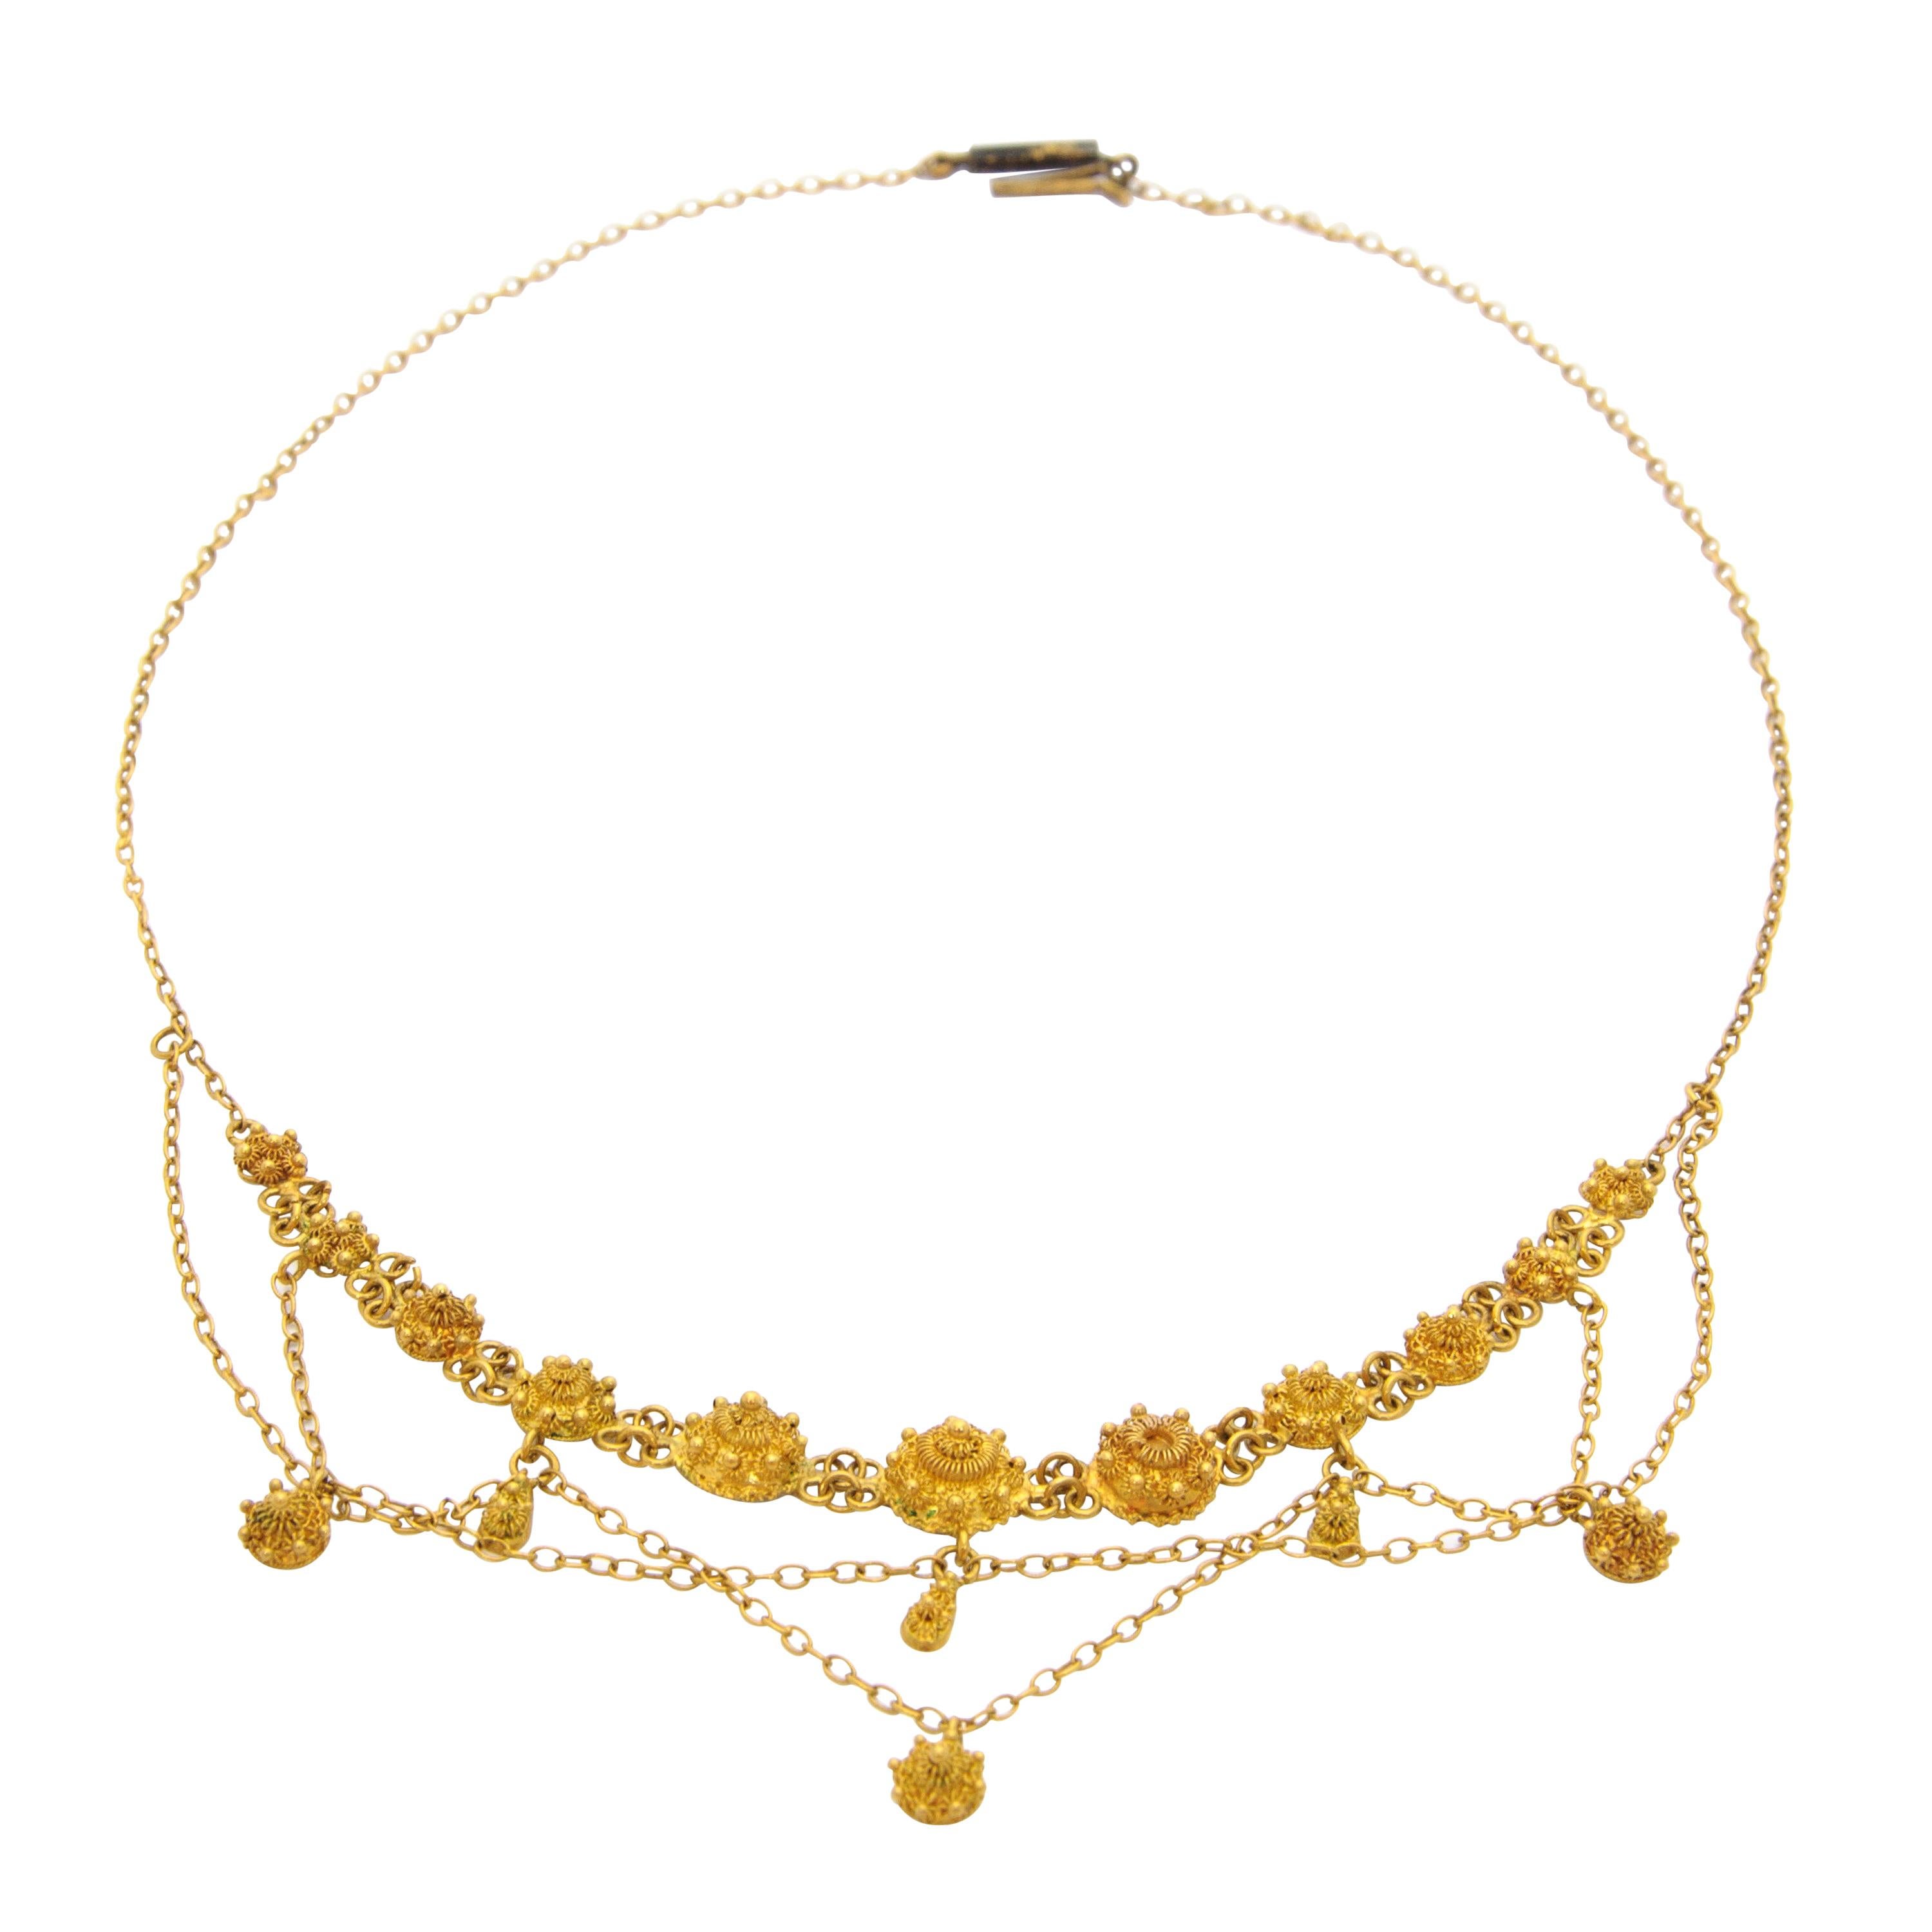 Victorian 14 Karat Yellow Gold Filigree Chain Necklace